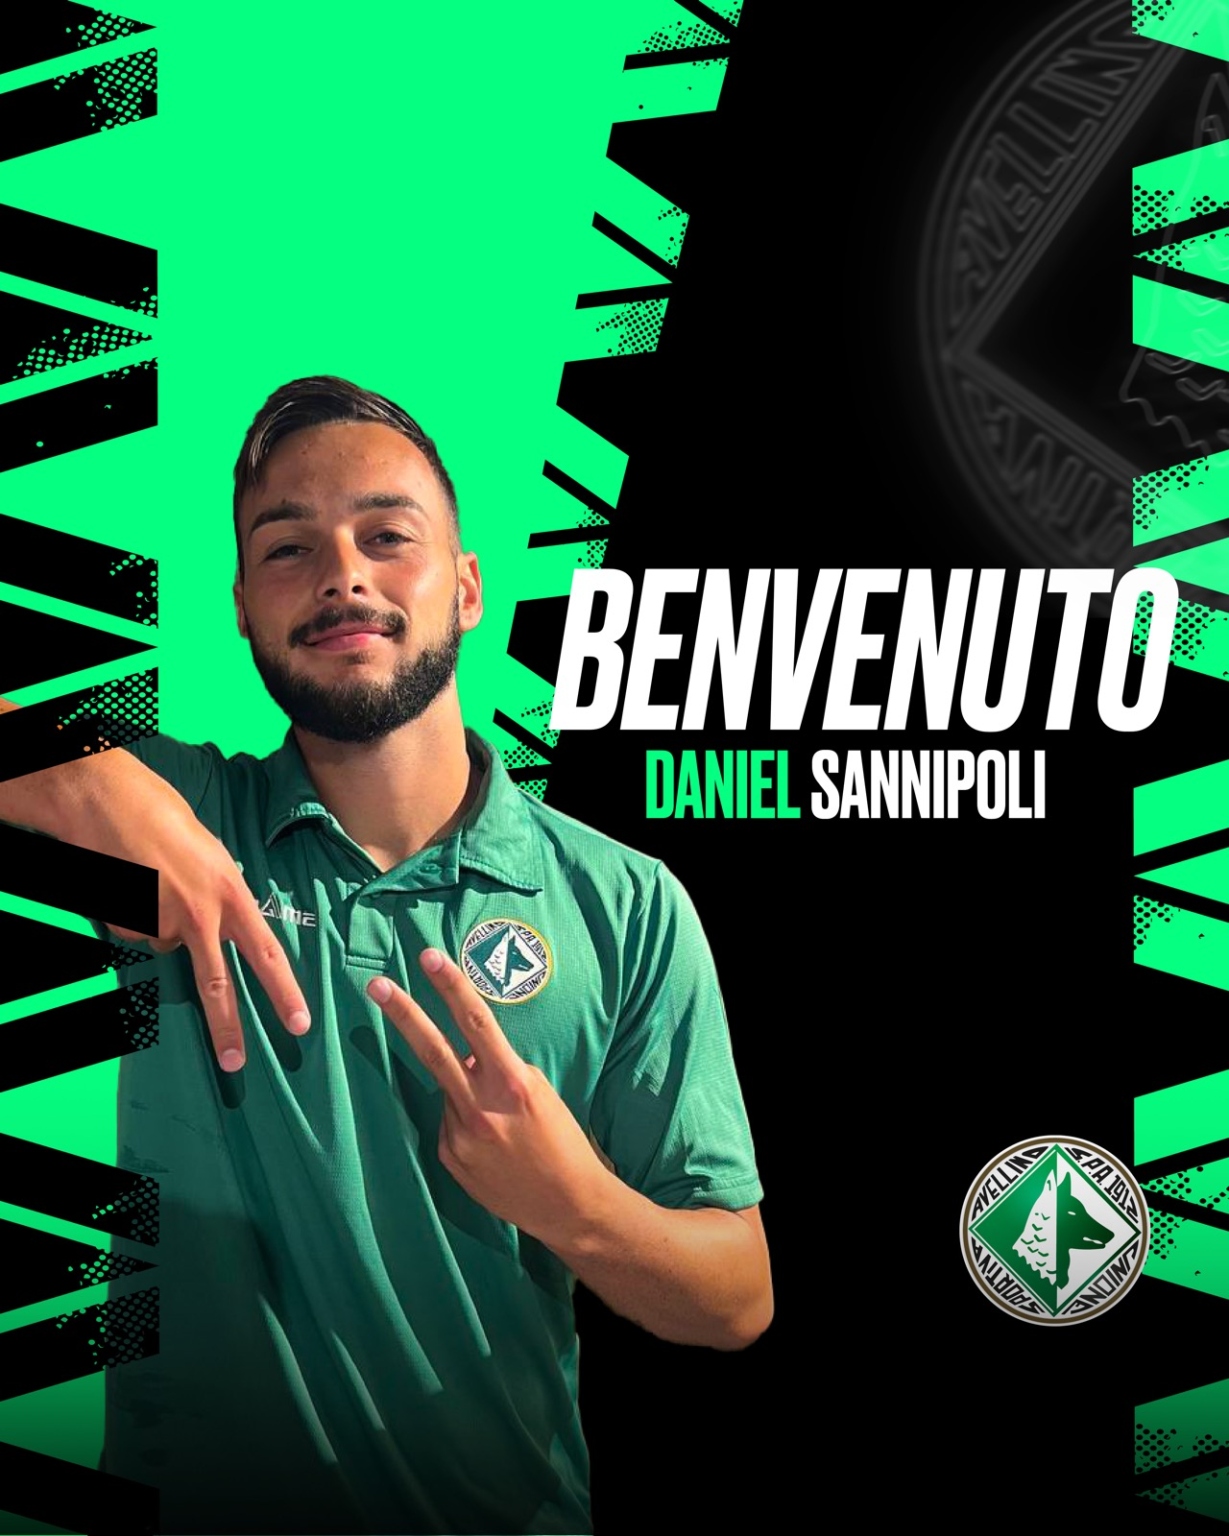 Avellino – Daniel Sannipoli